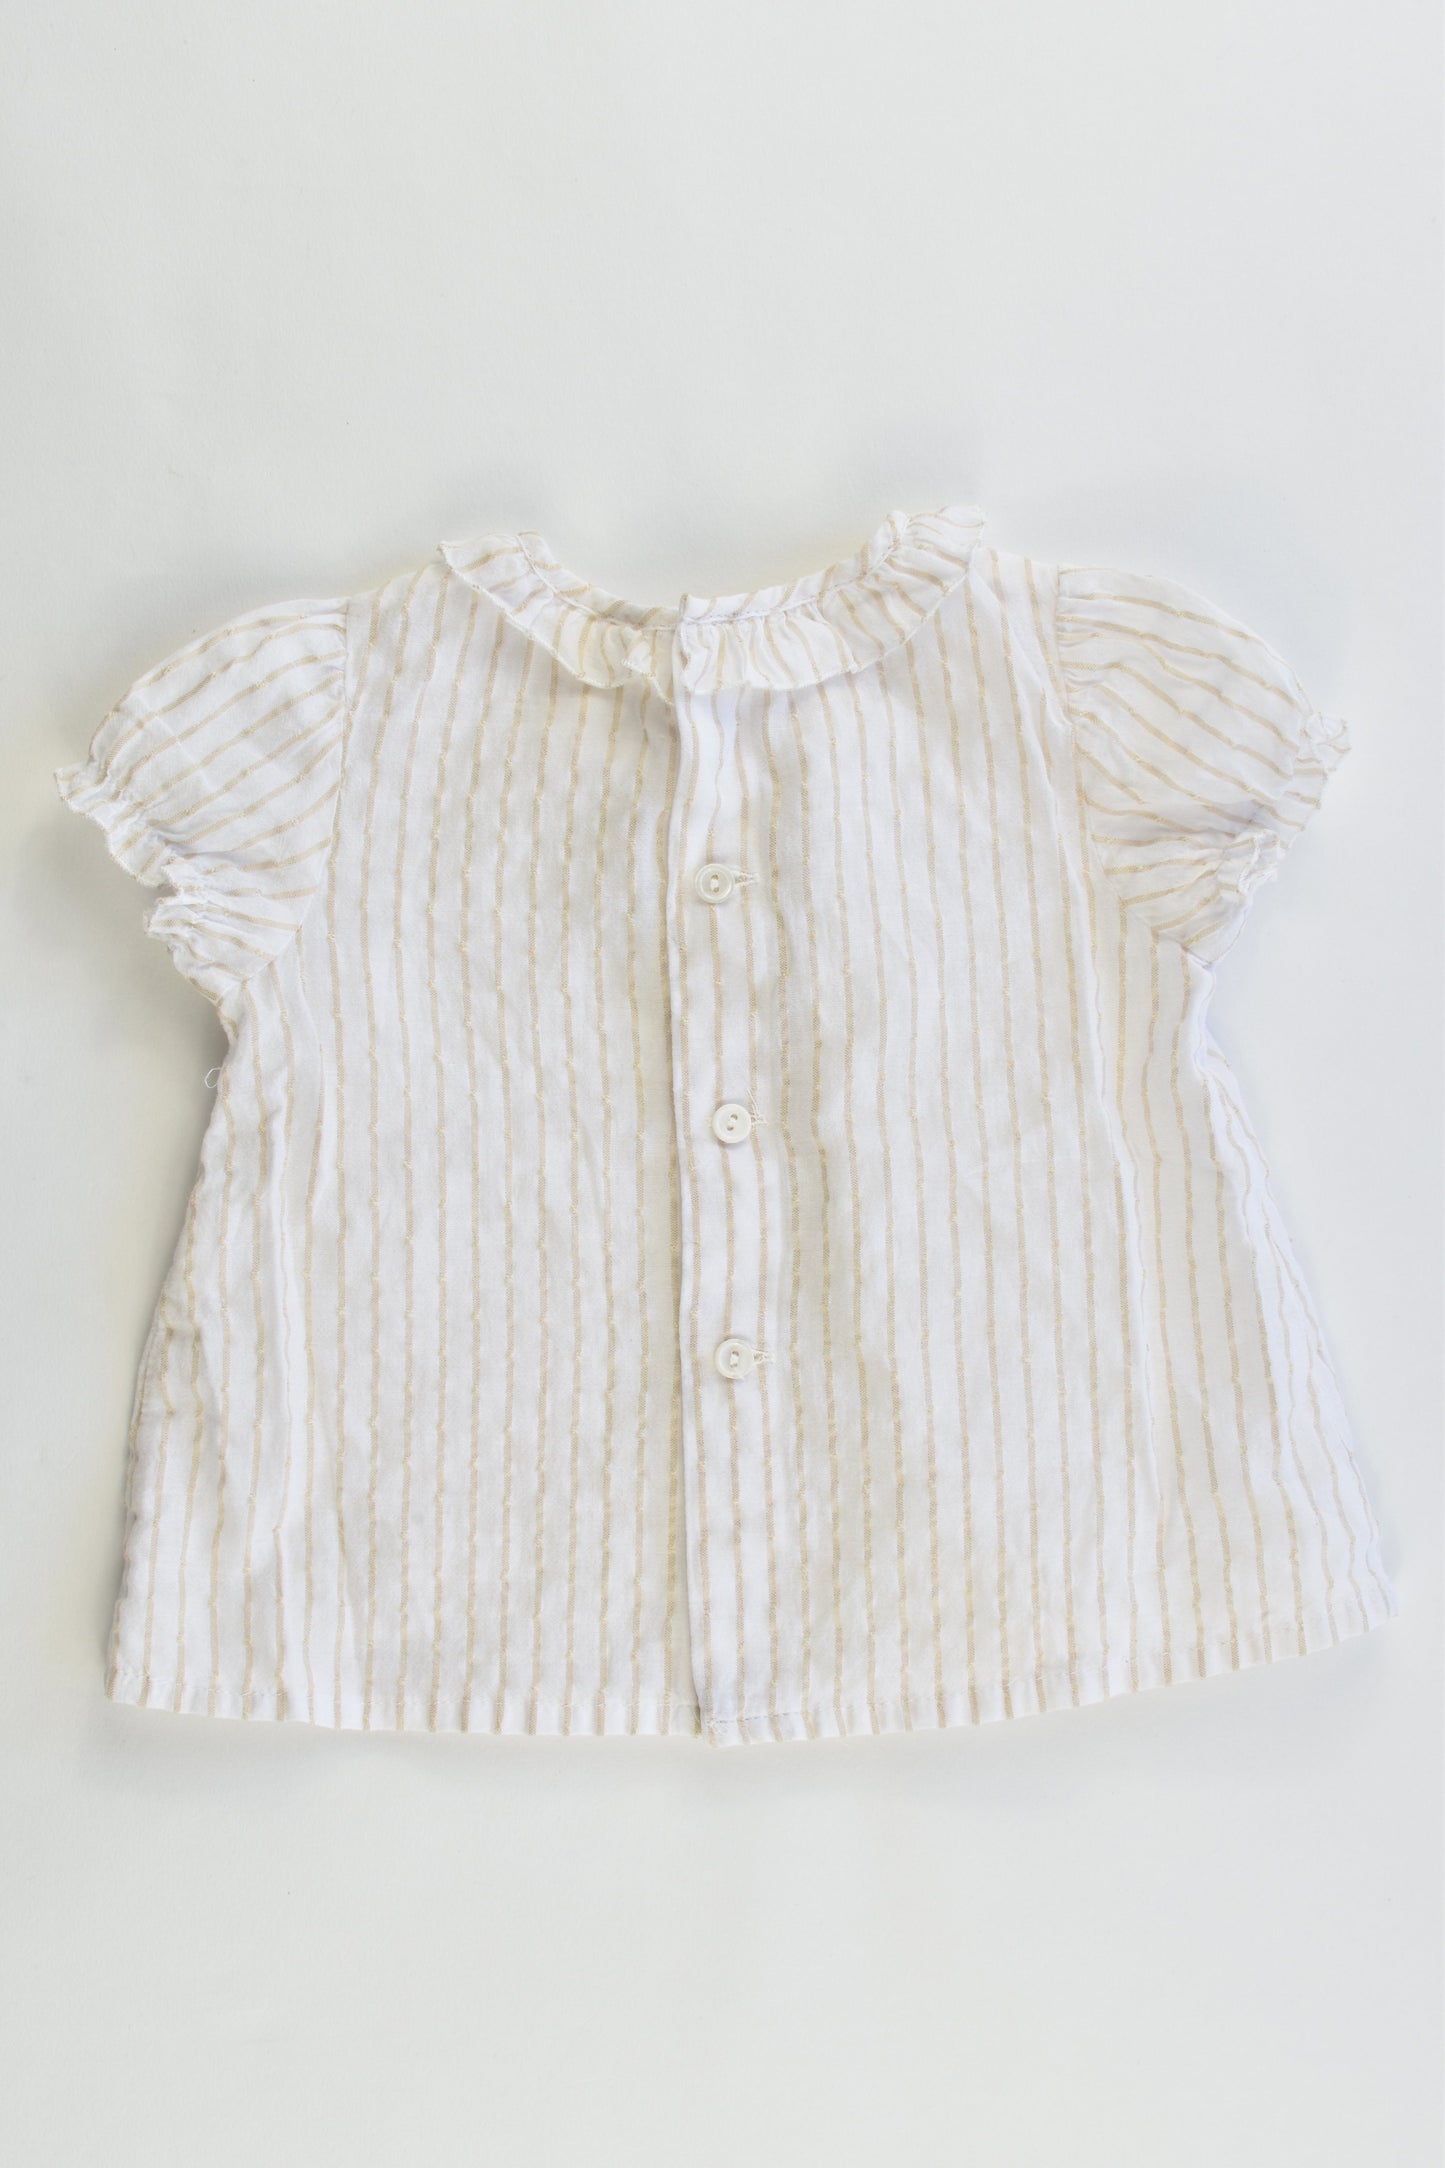 Zara Size 6-9 months (74 cm) Shirt